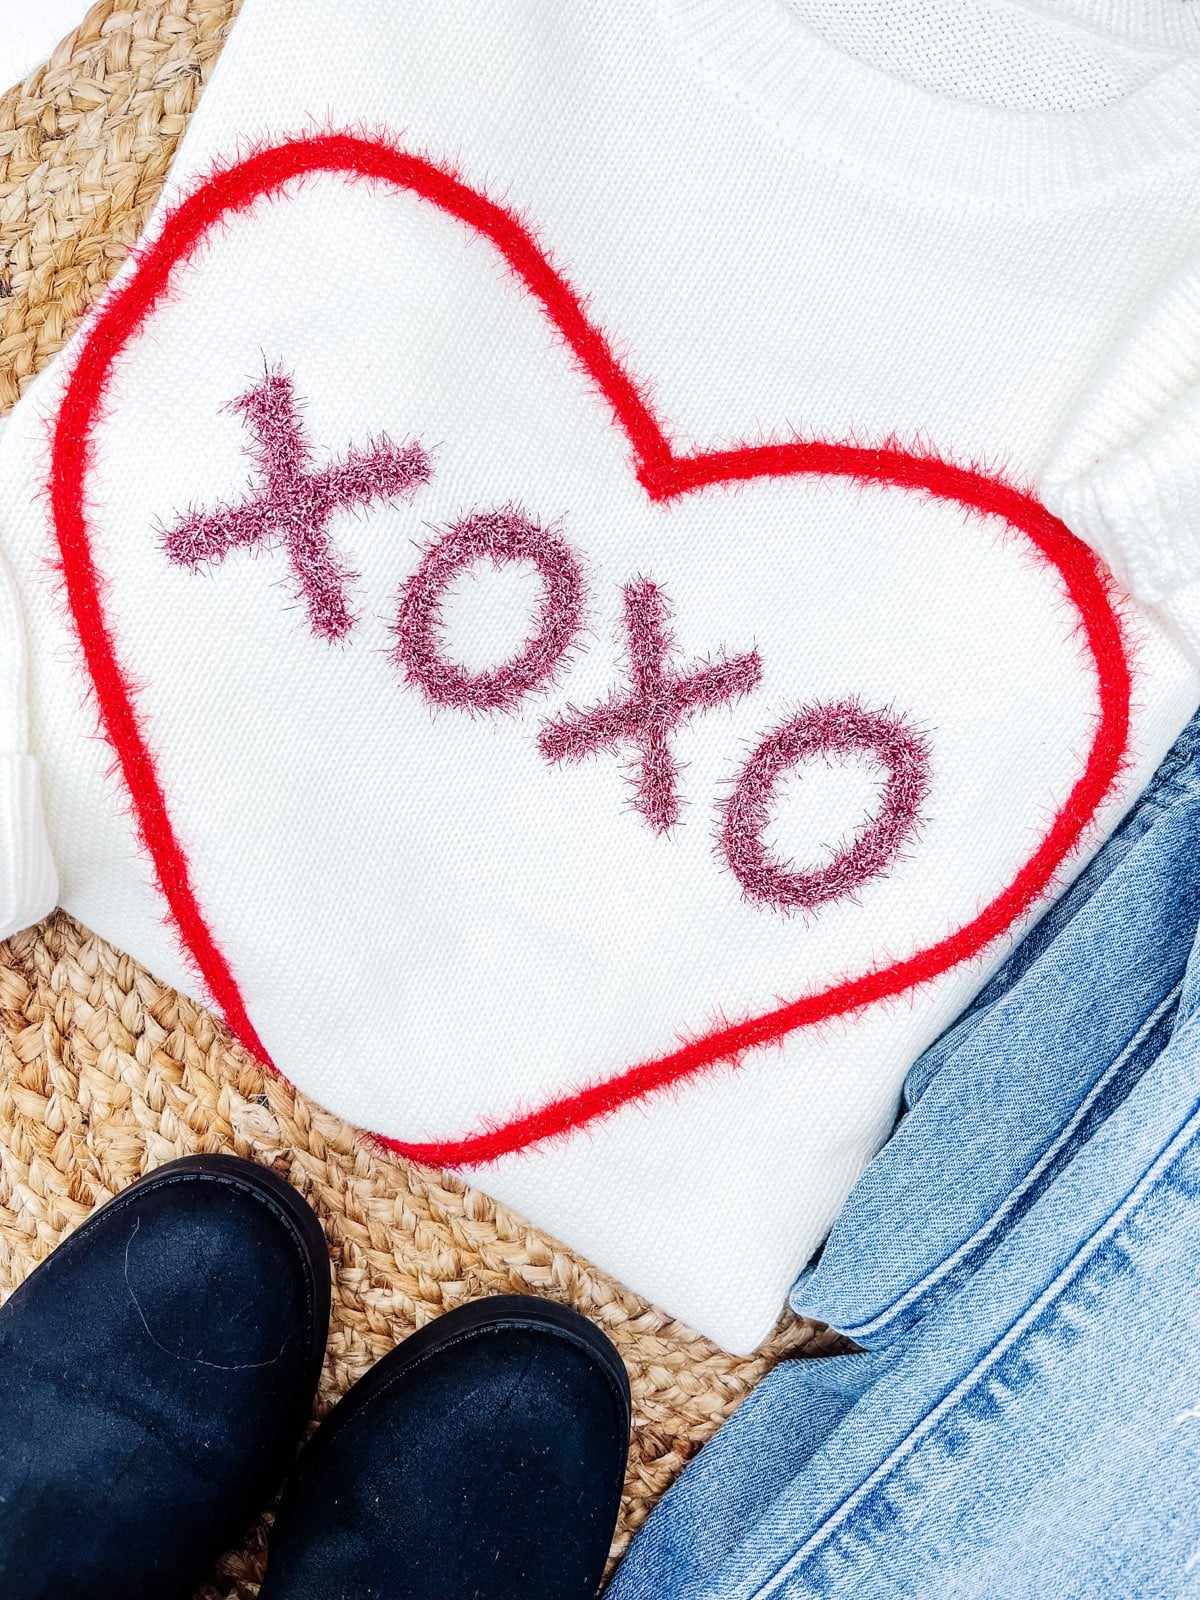 RTS: Knitted Heart XOXO Sweater*